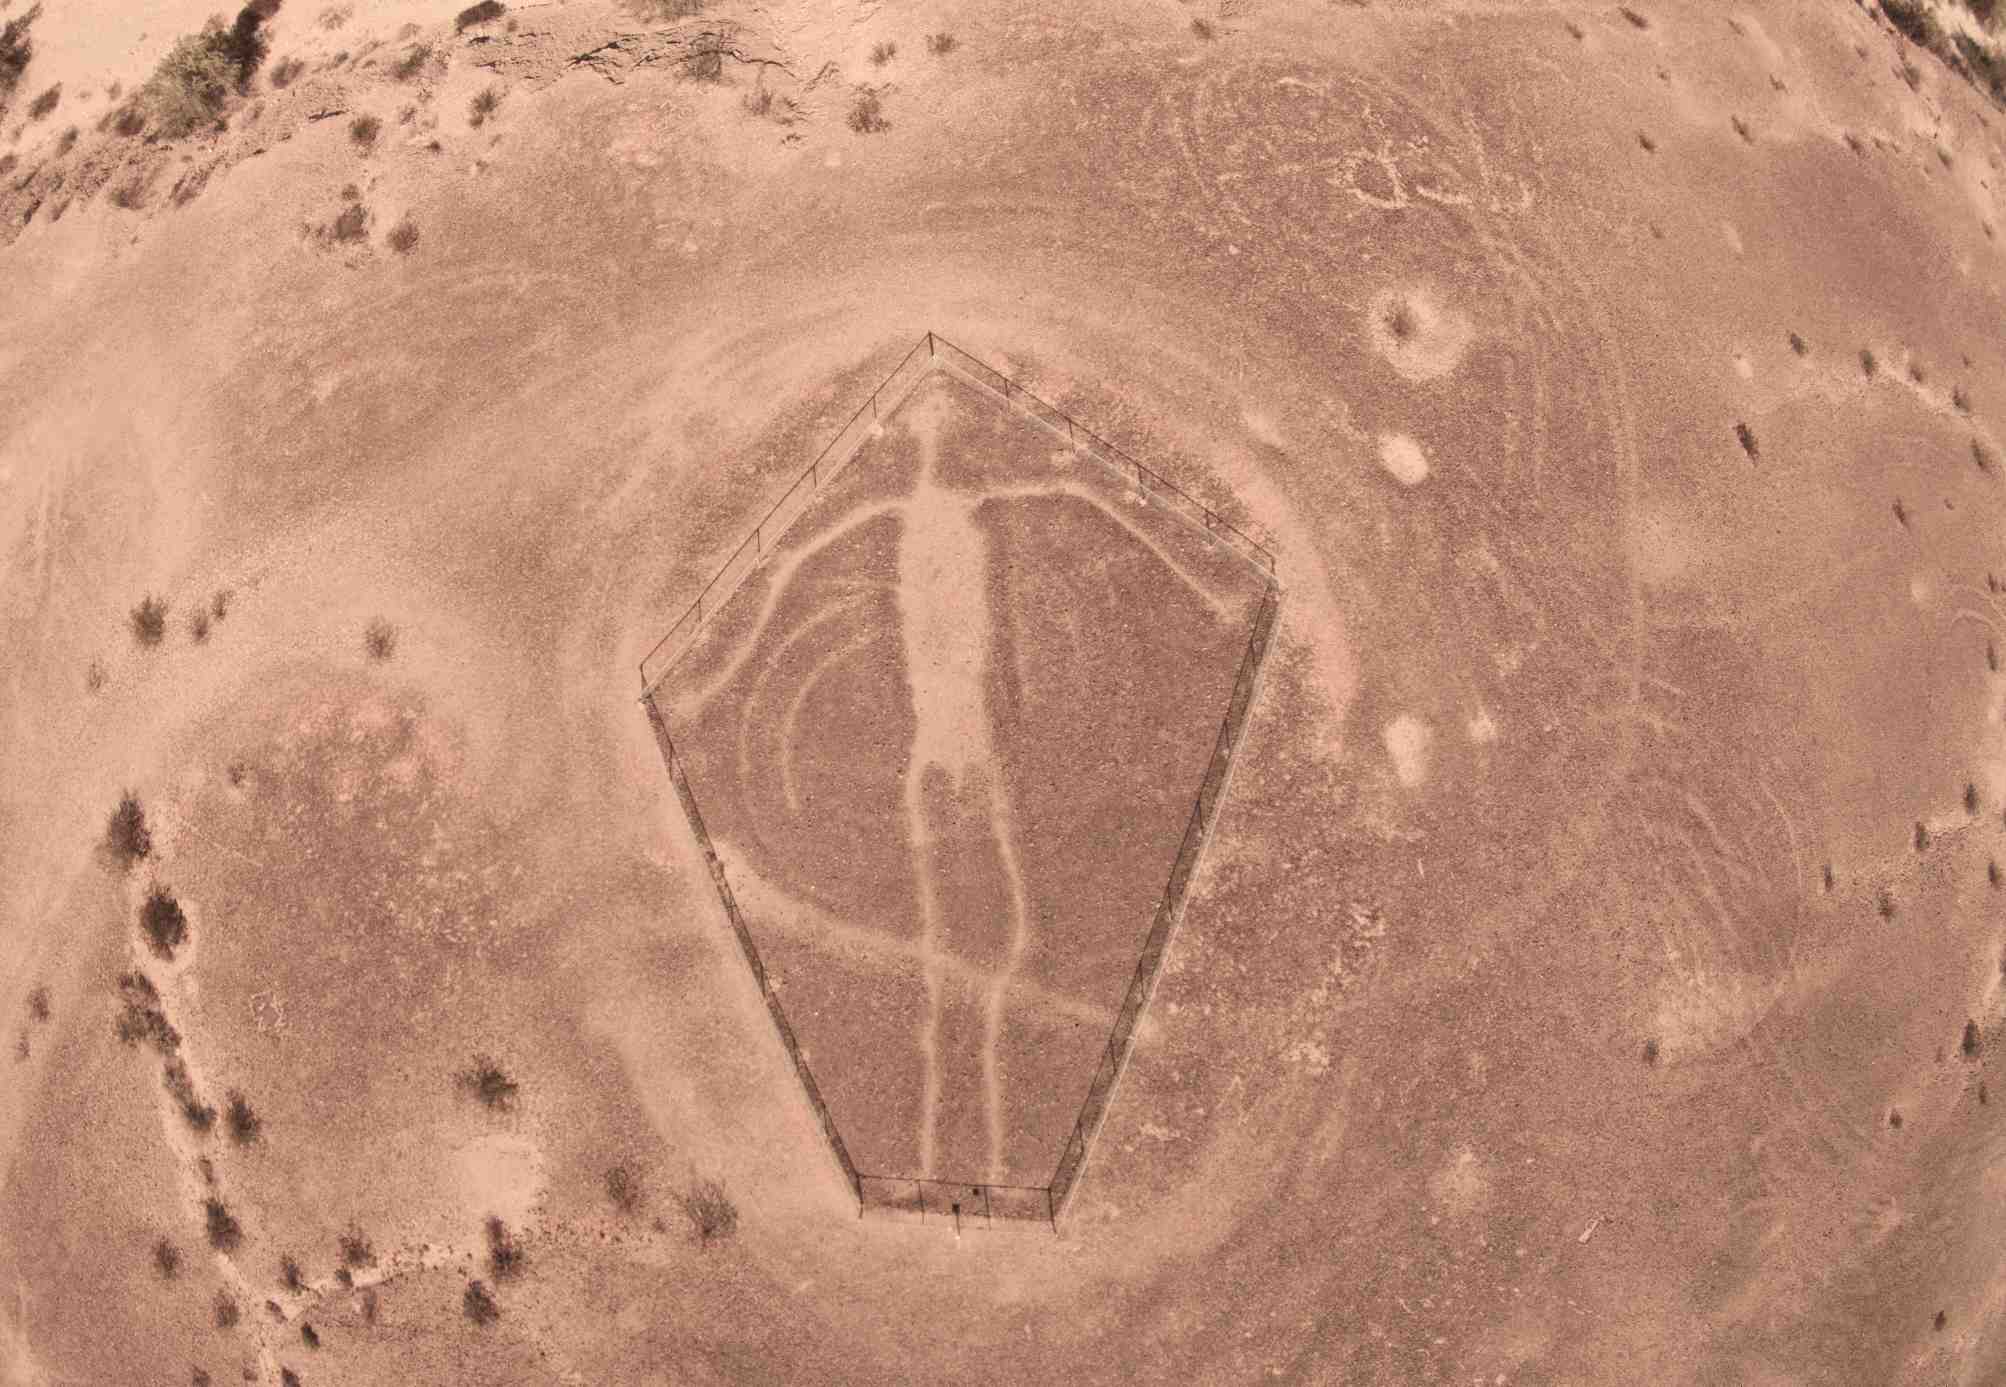 Blythe Intaglios: The impressive anthropomorphic geoglyphs of the Colorado Desert 2